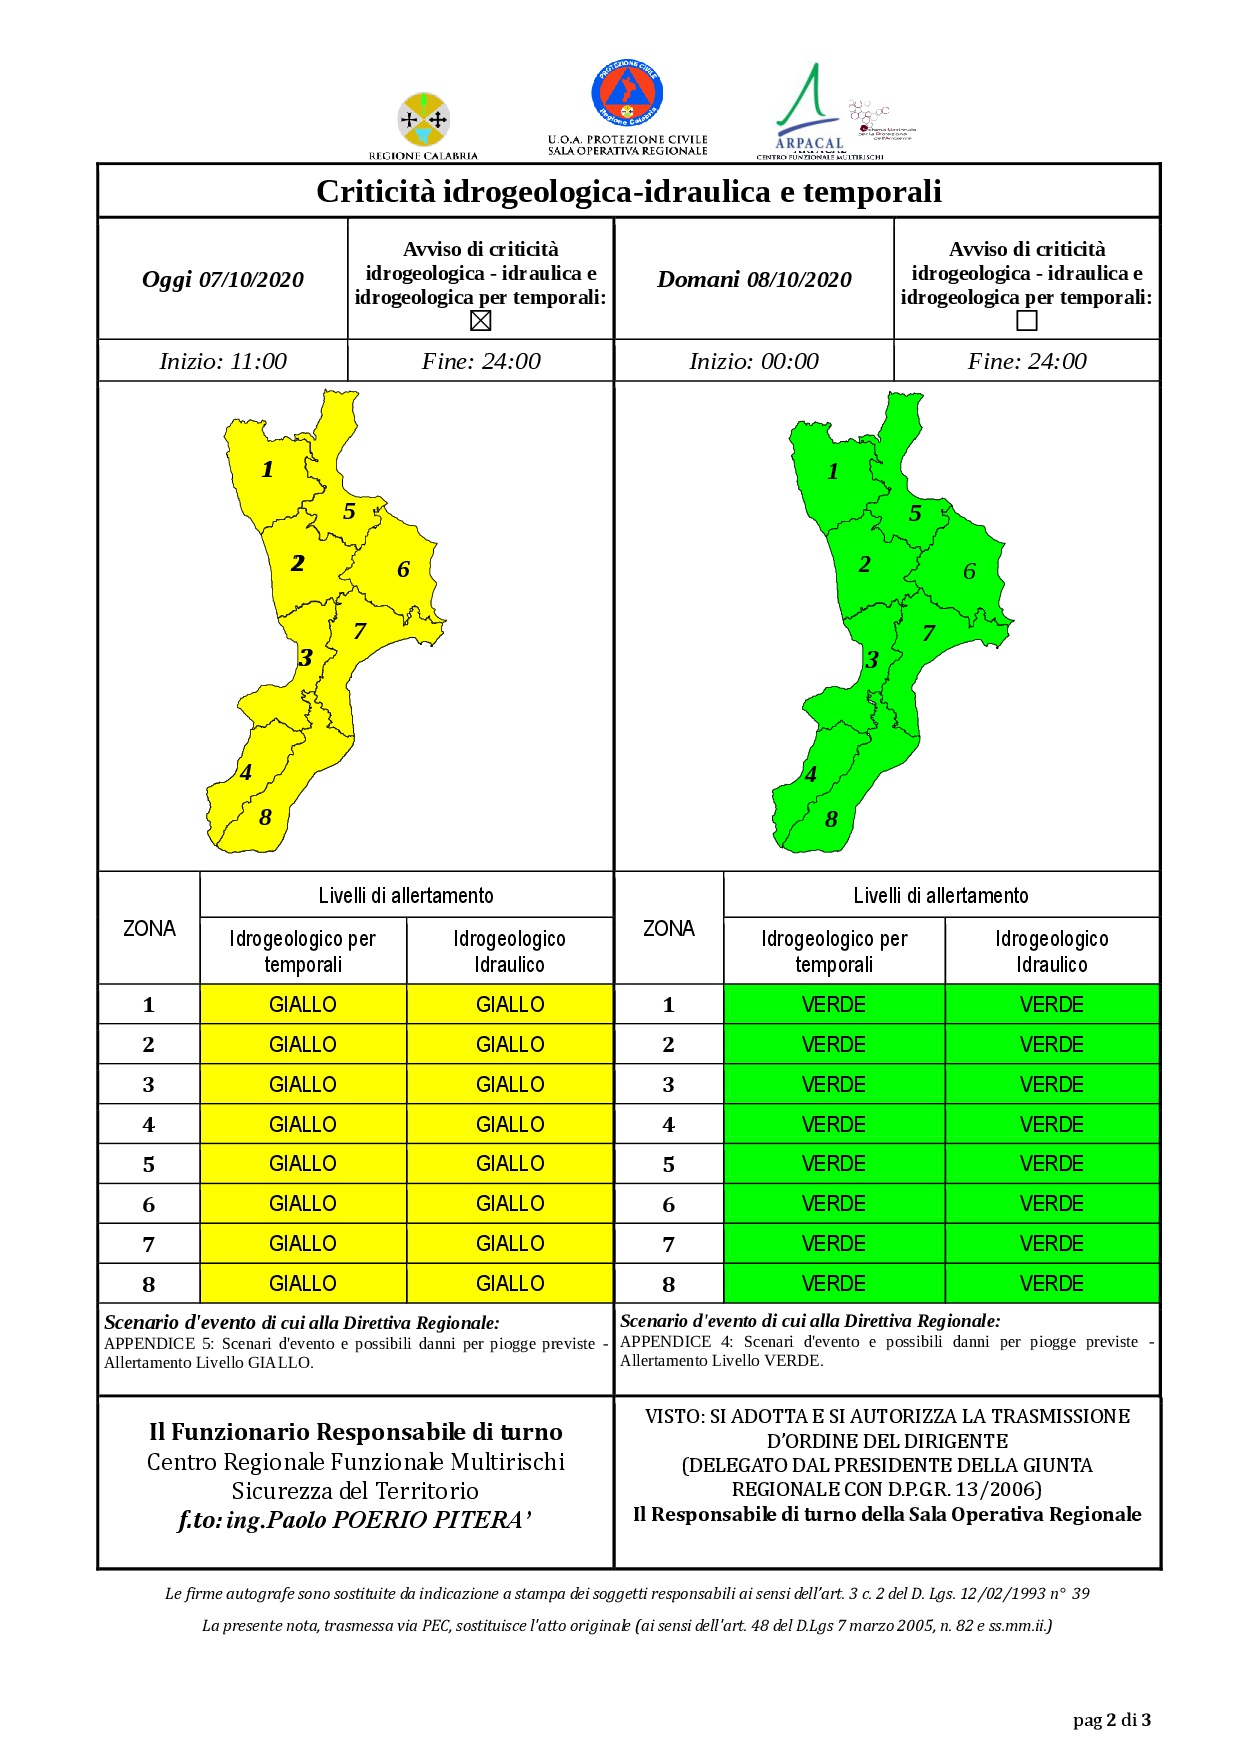 Criticità idrogeologica-idraulica e temporali in Calabria 07-10-2020